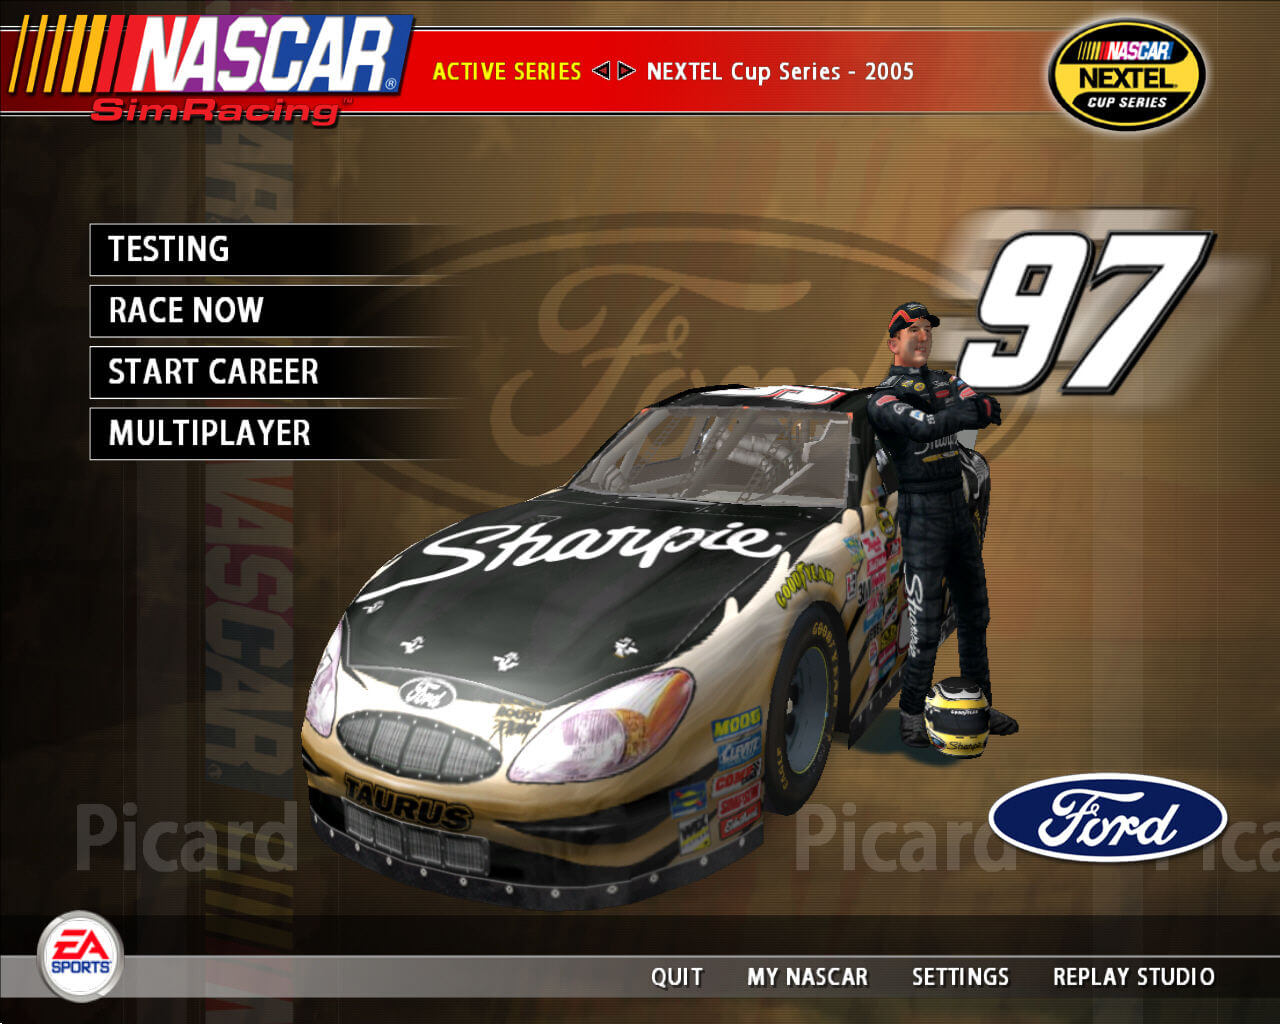 Download NASCAR SimRacing (Windows)